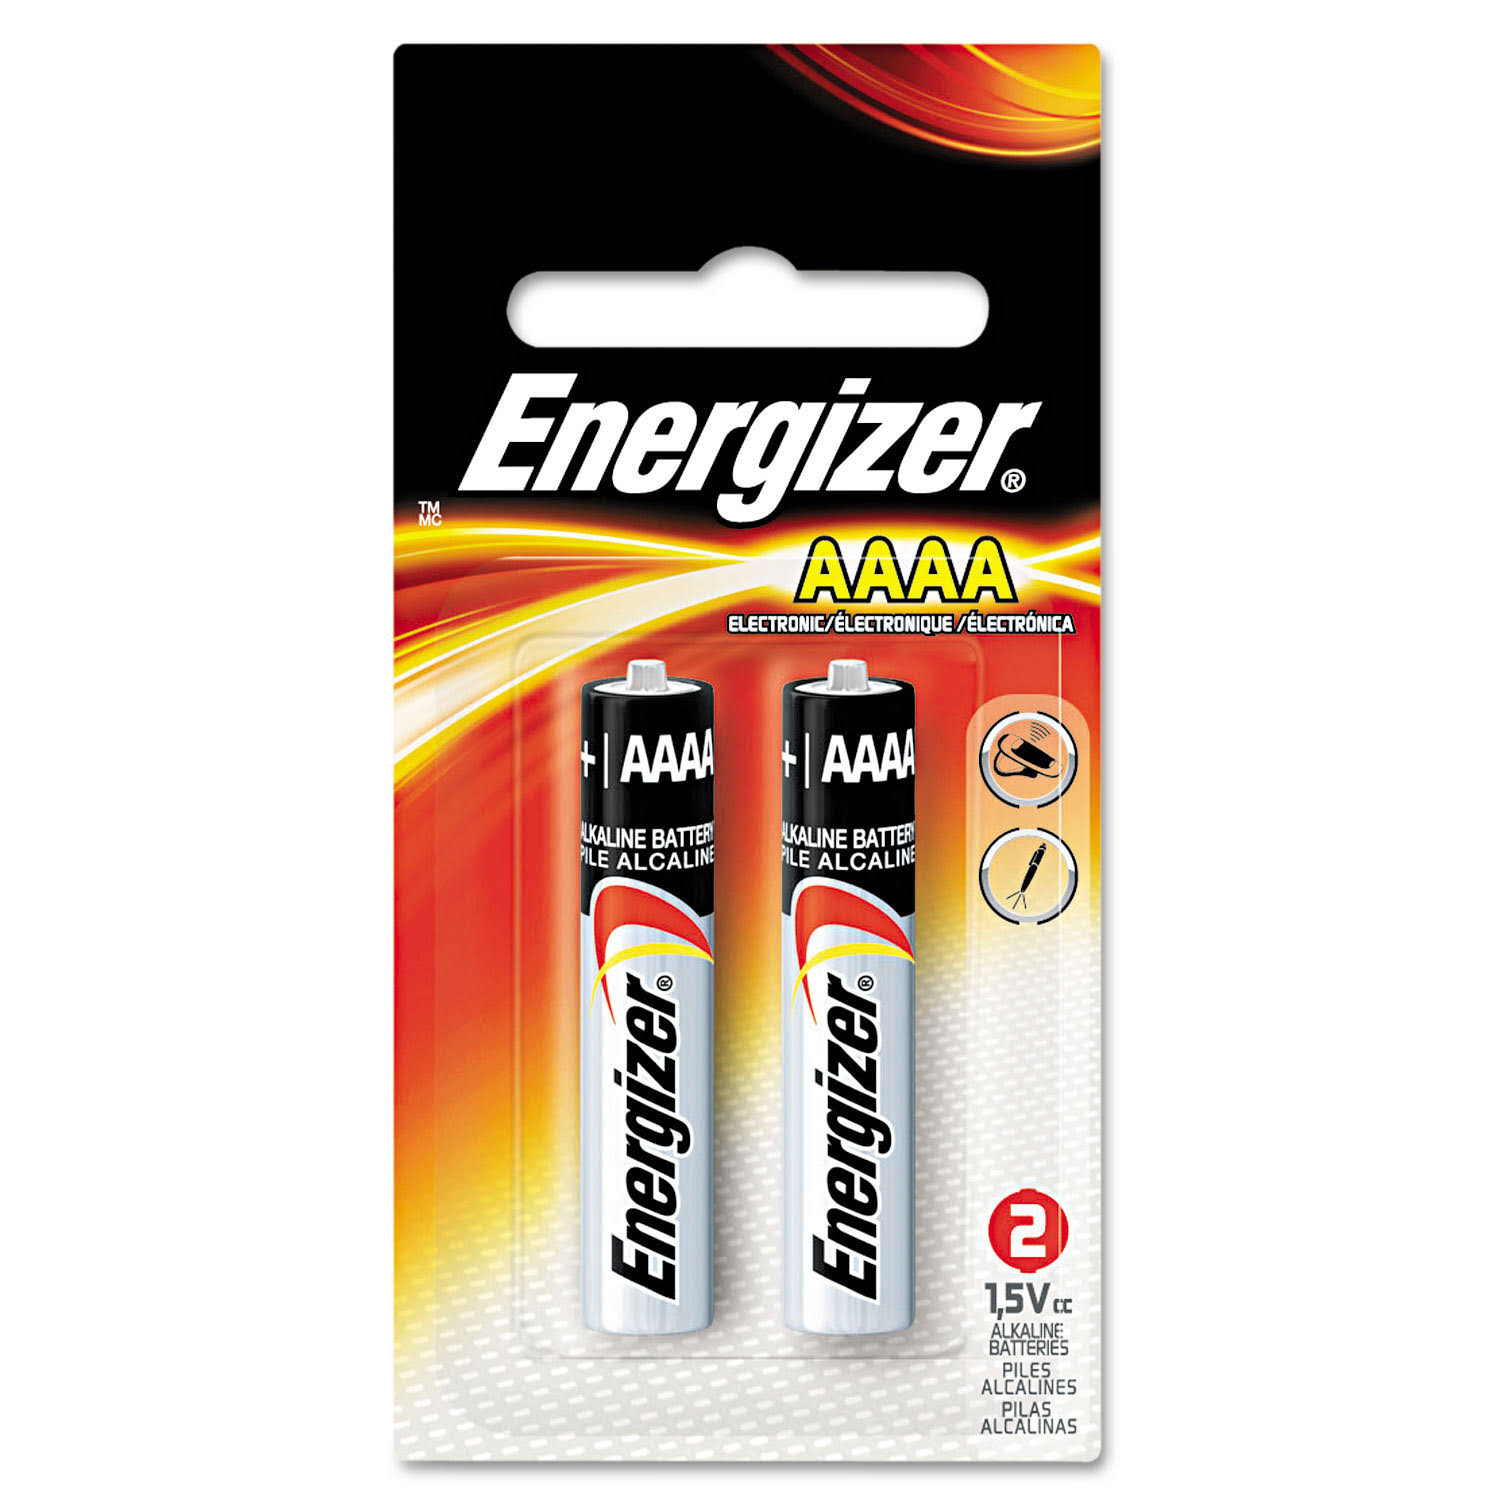 Energizer Alkaline Batteries - Size AAAA, 1.5v, x2